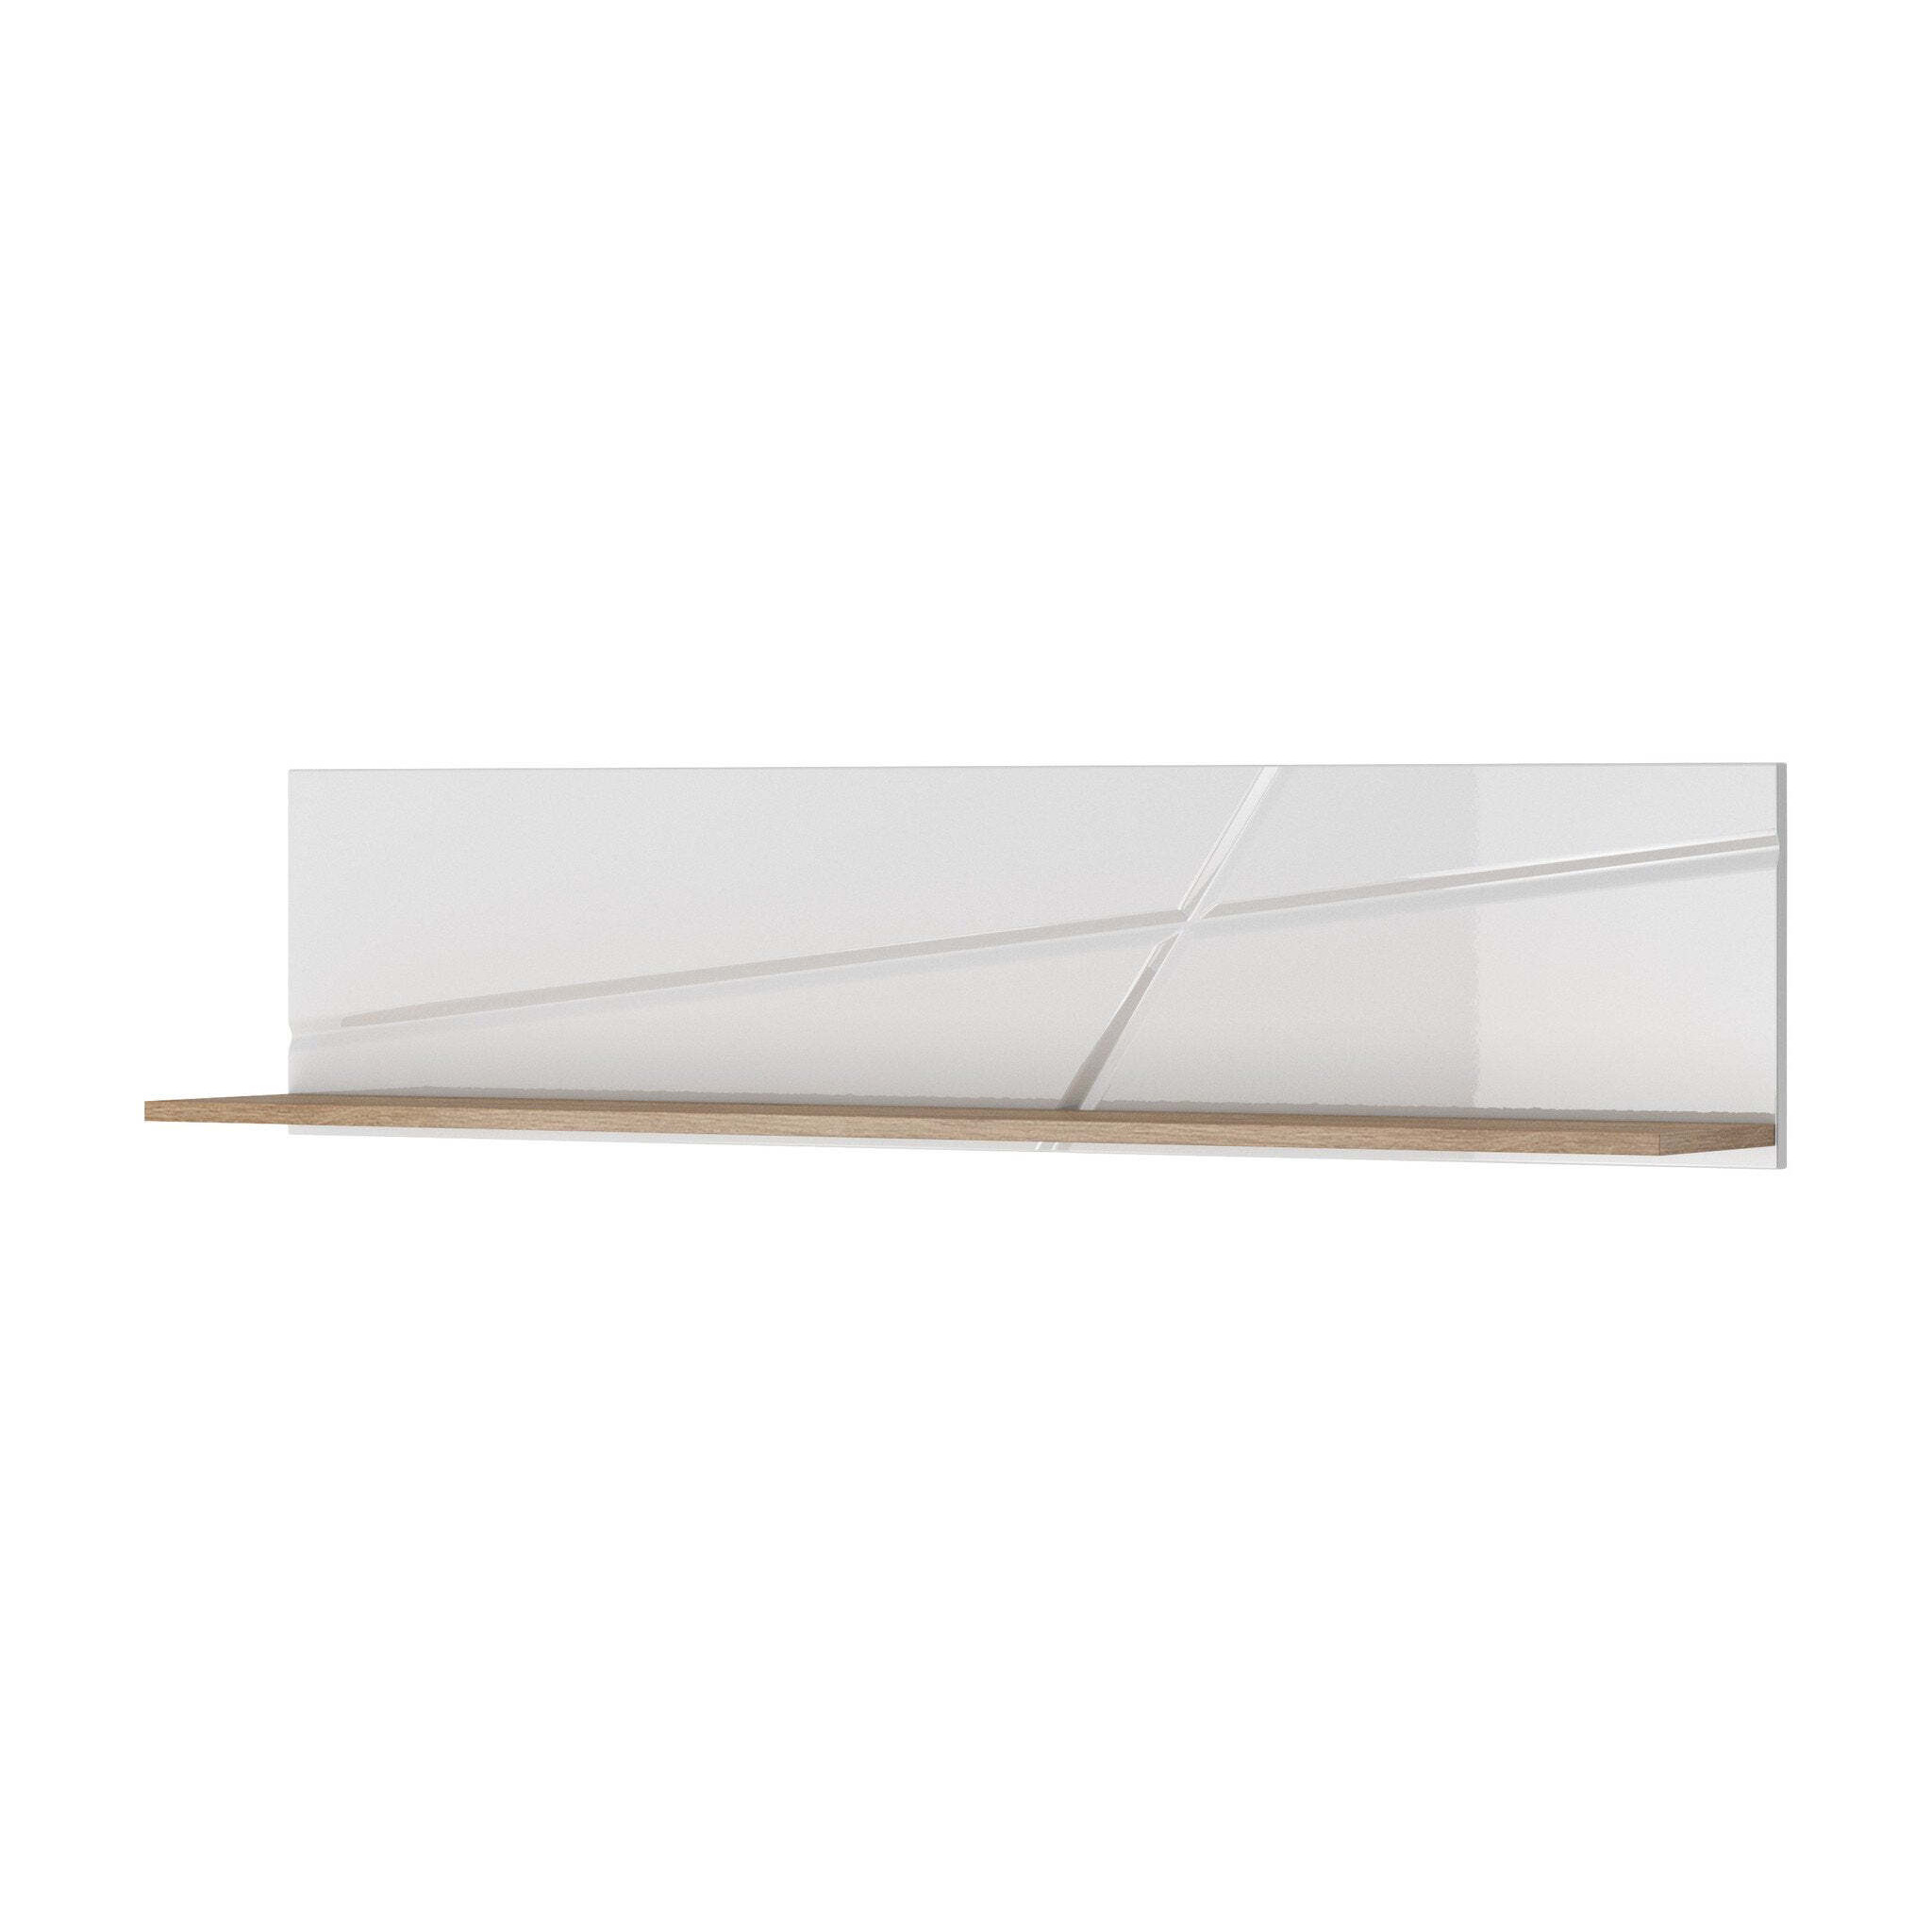 Futura FU-04 Wall Shelf 130cm - White Gloss 130cm - image 1